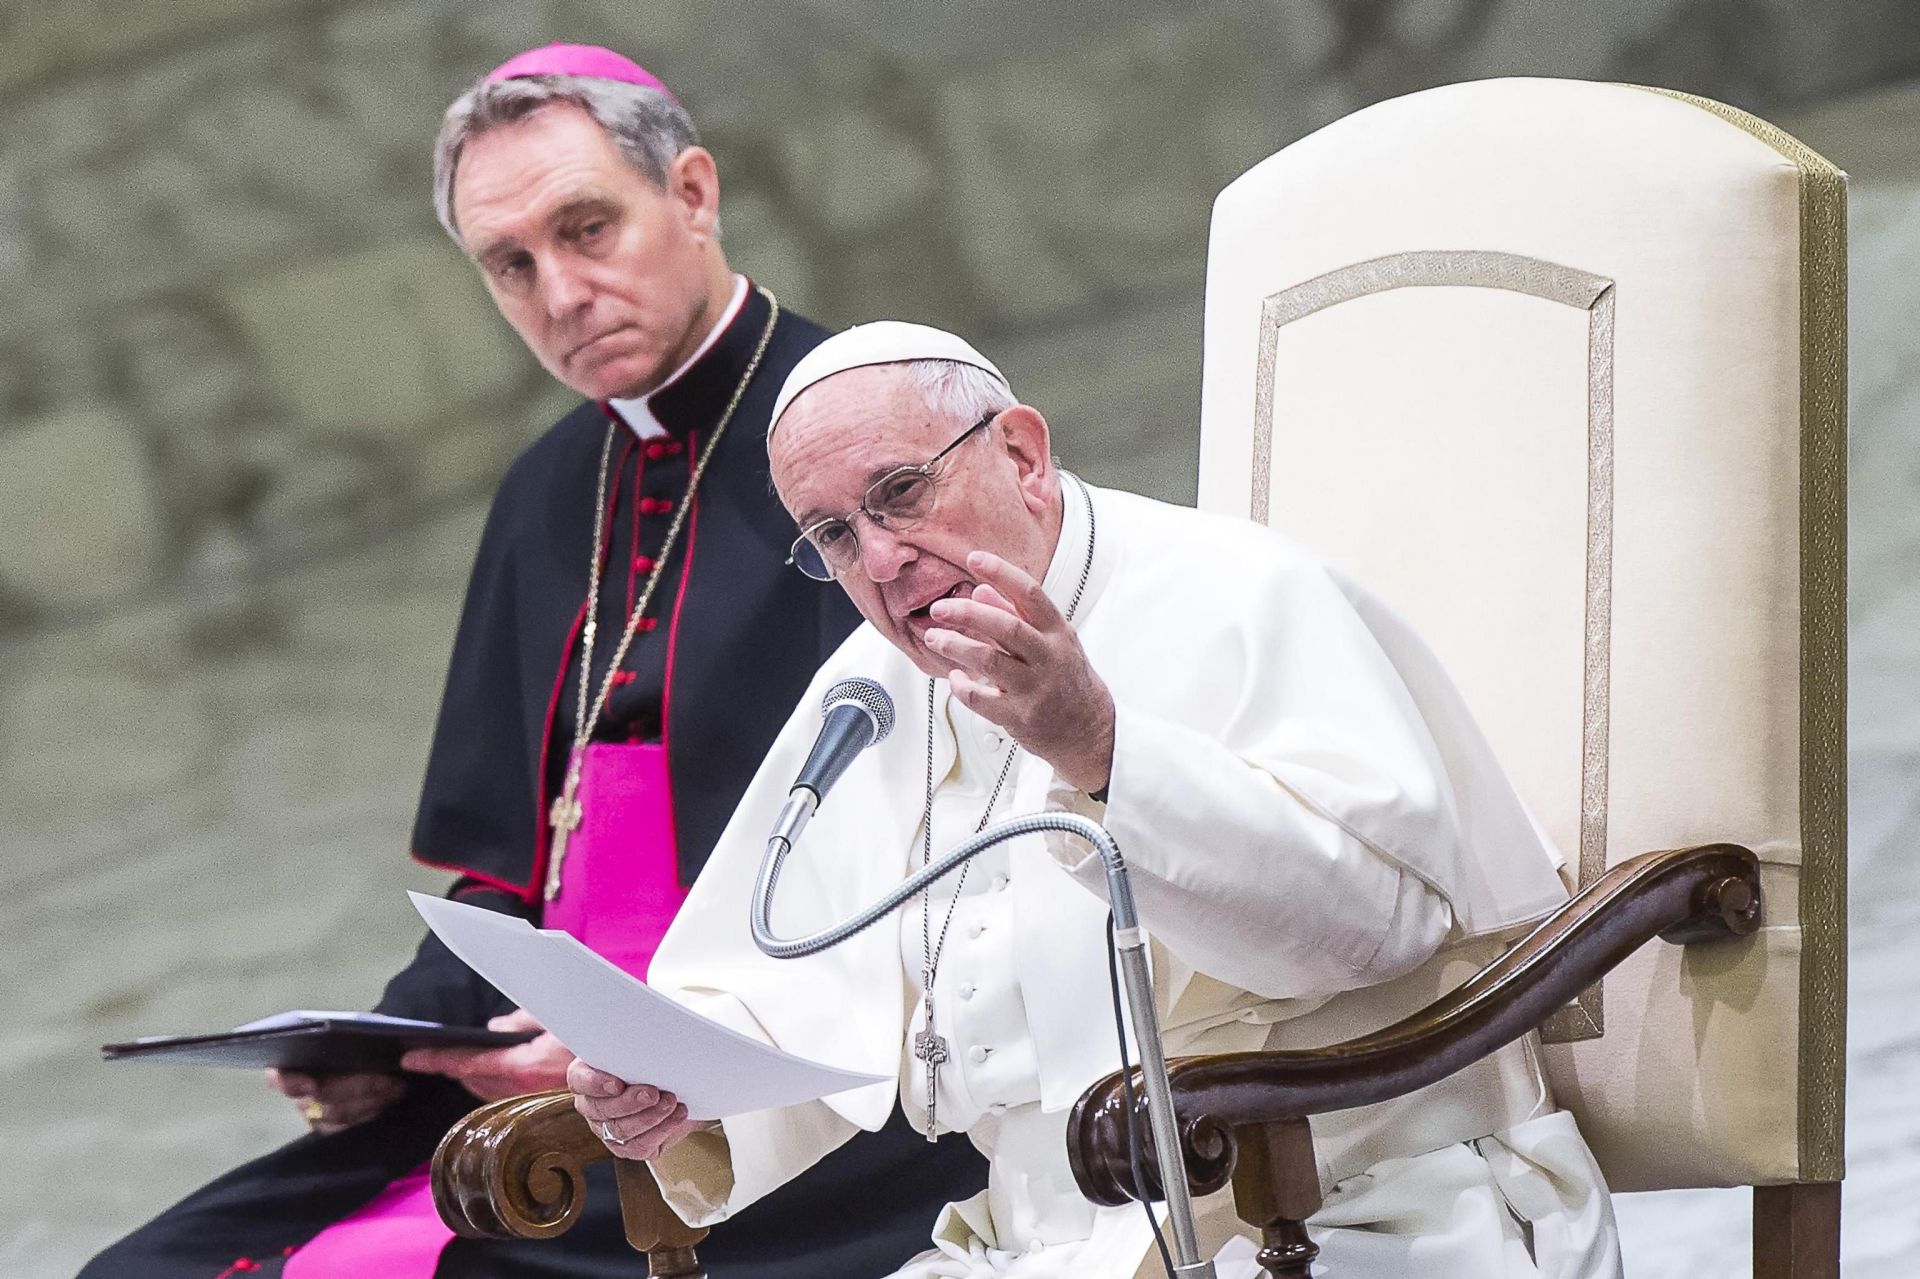 OGRANIČENA ULOGA: Papa imenovao izaslanika zbog pastoralnih potreba